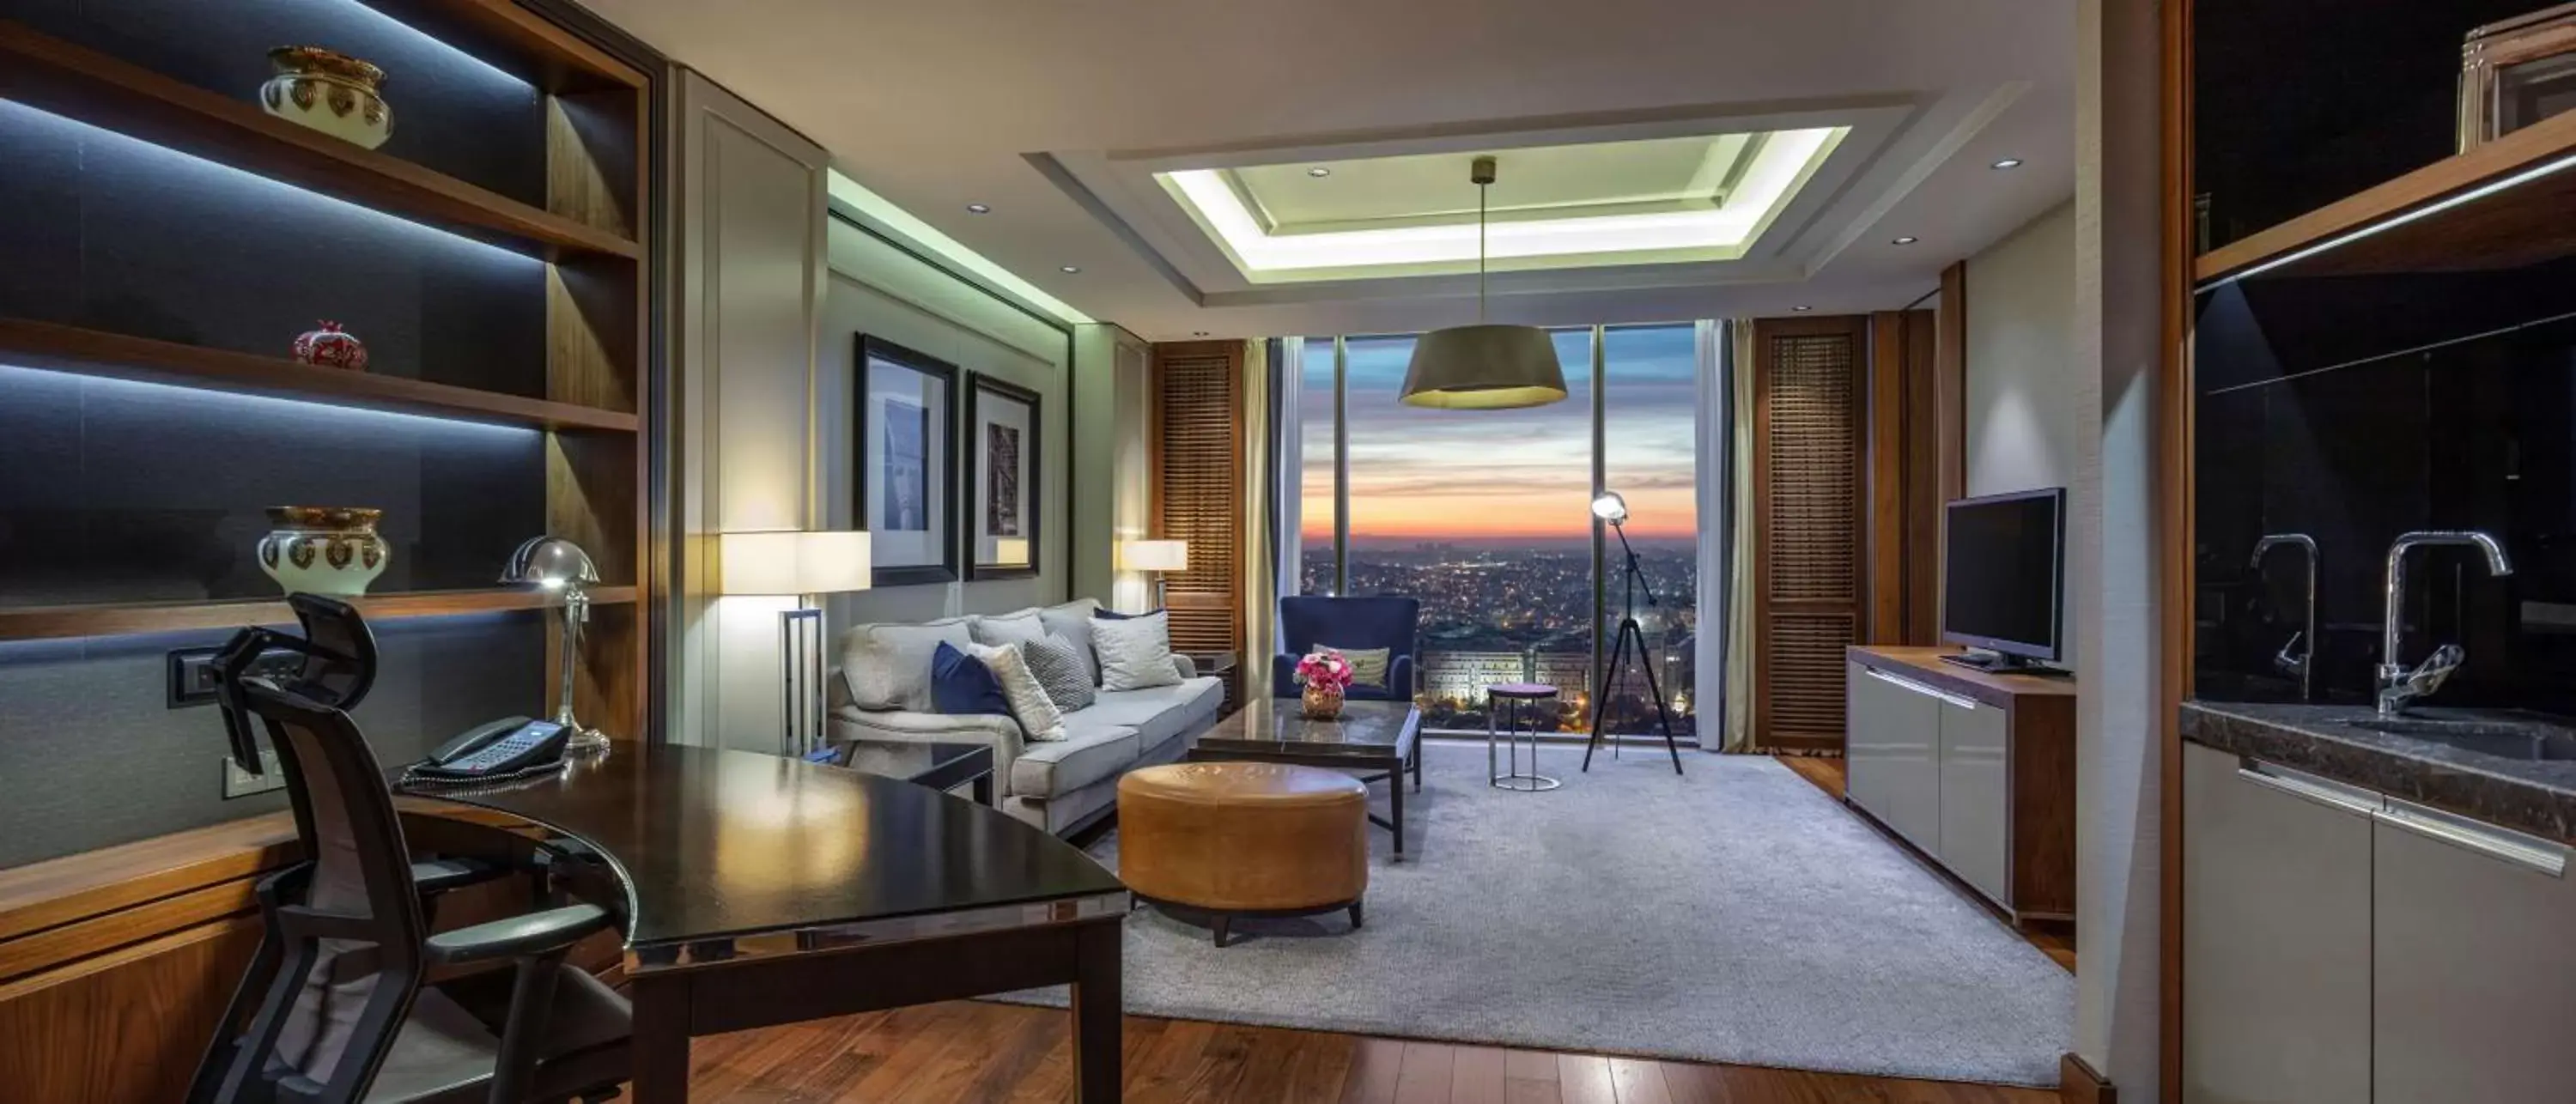 Living room in Hilton Istanbul Bomonti